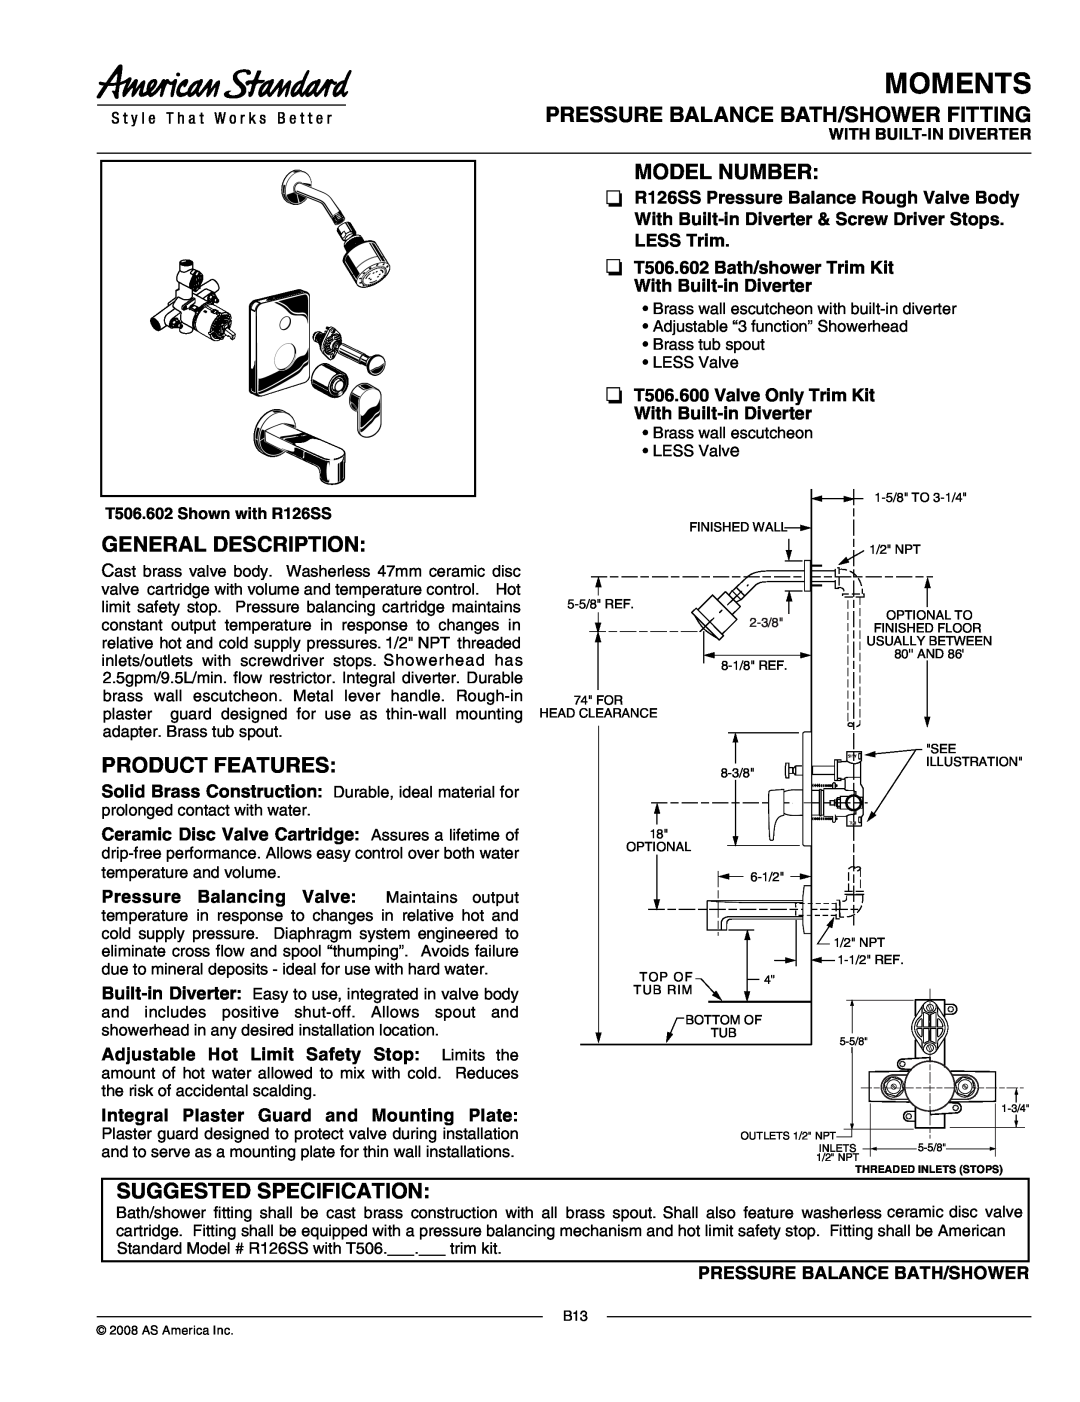 American Standard R126SS manual Moments, Pressure Balance Bath/Shower Fitting, Model Number, General Description 